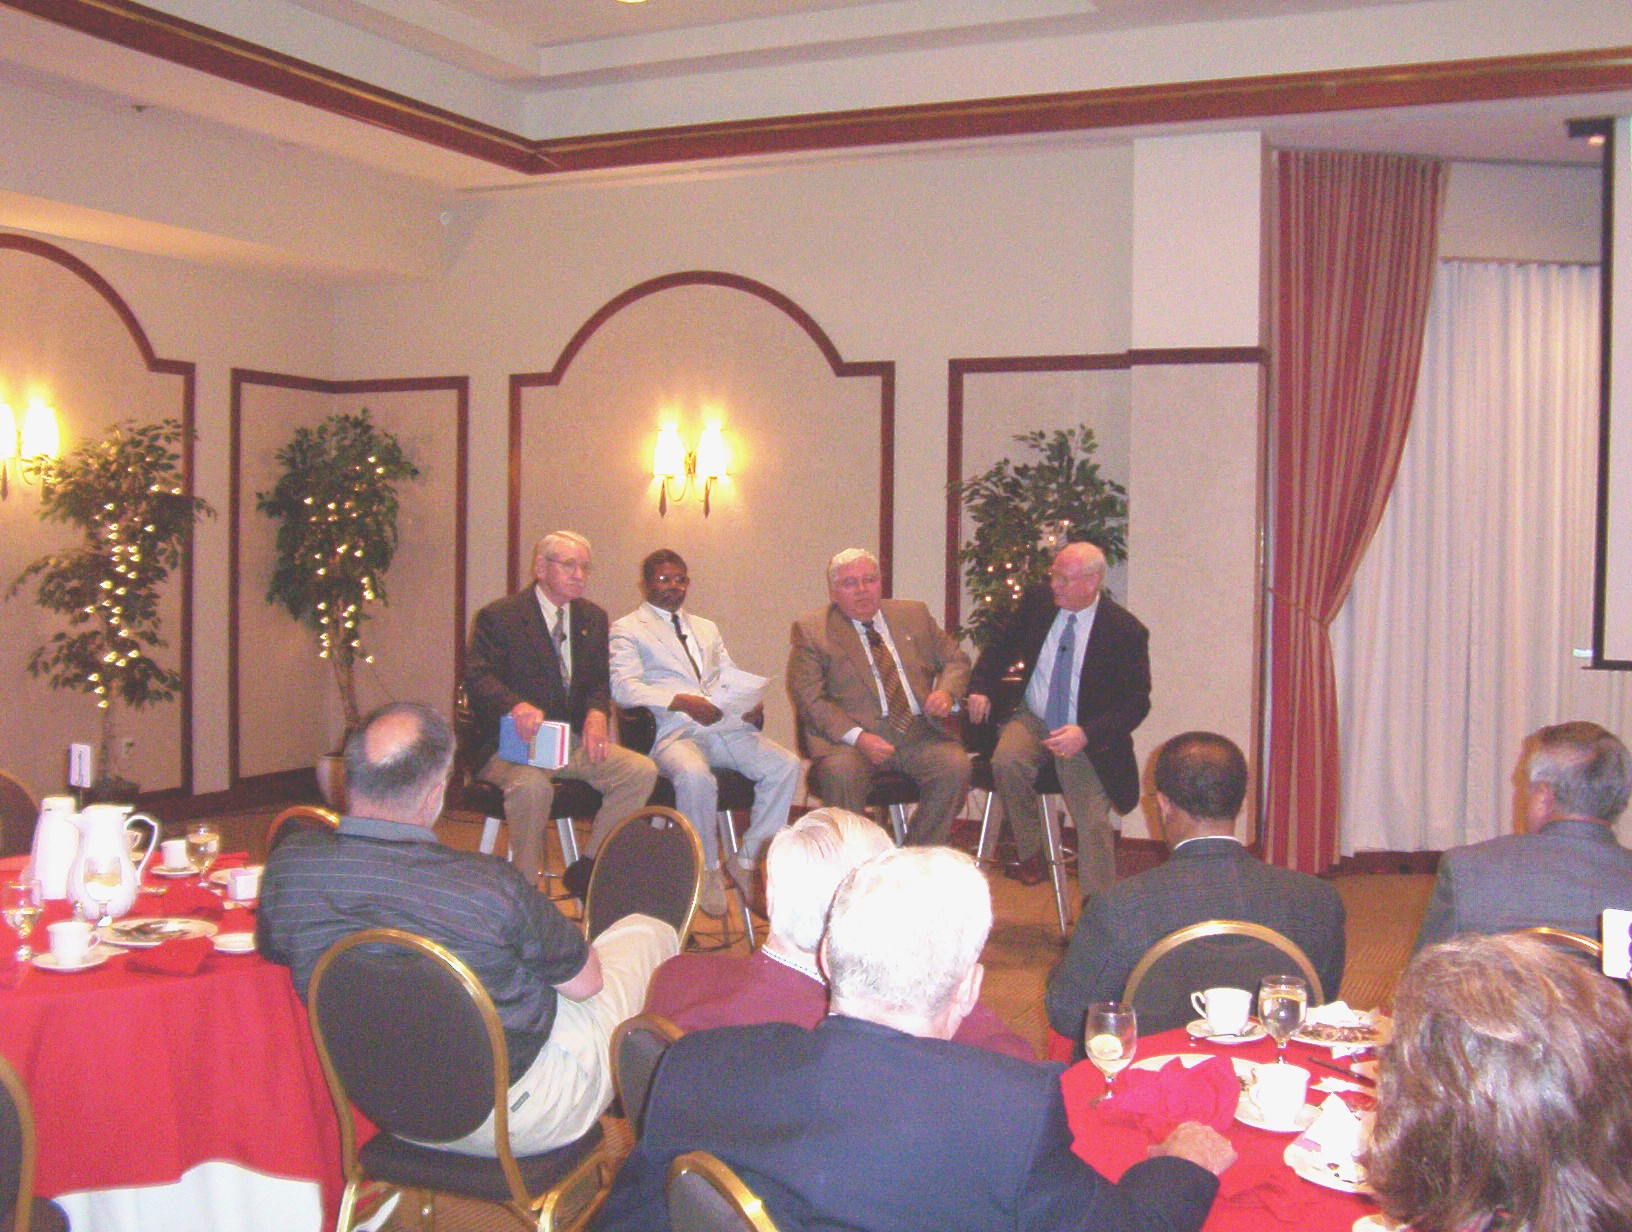 seated left to right: Rev. Wallace, John Jackson, Bob Beck , and  Ed Hobart